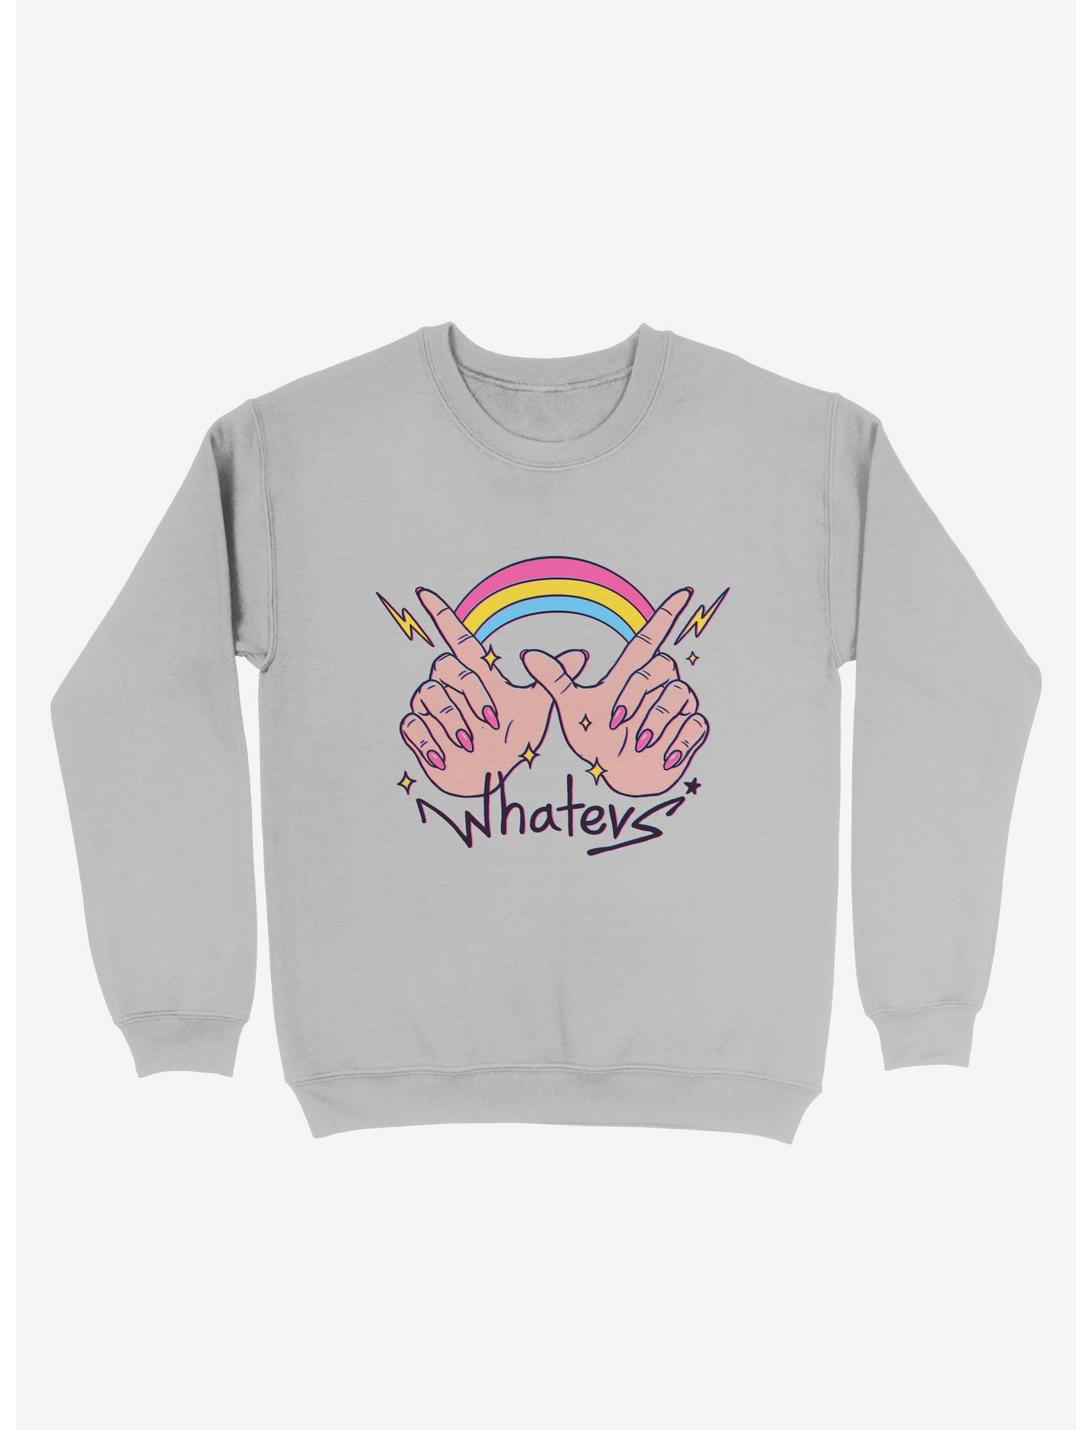 Whatevs! Rainbow Sweatshirt, SILVER, hi-res